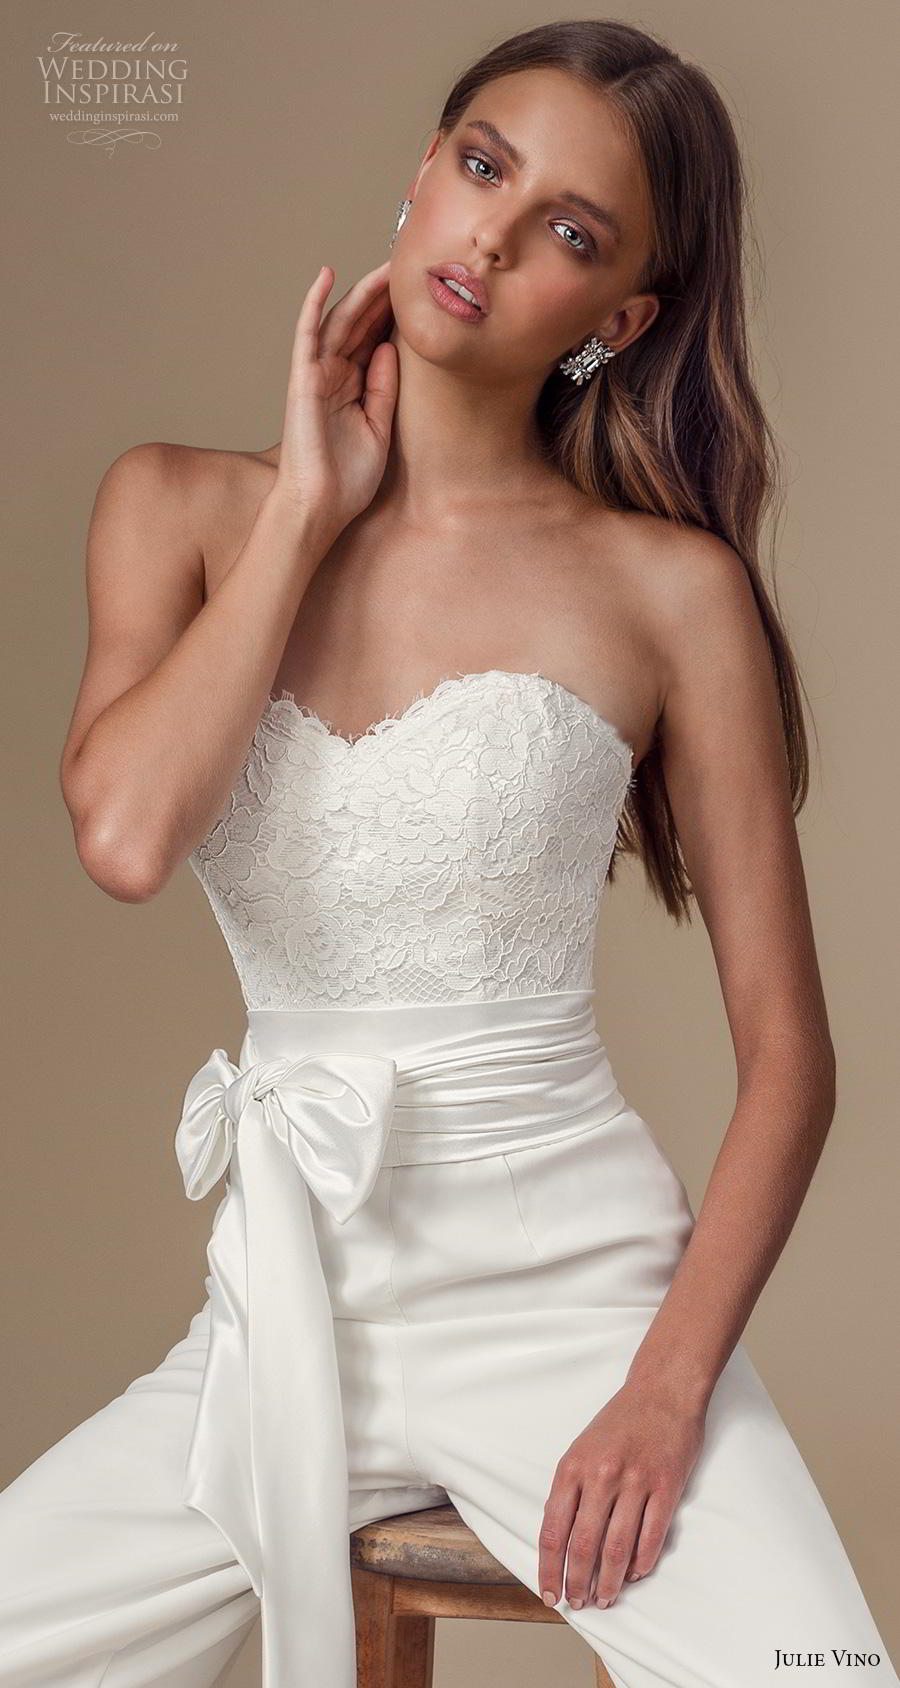 julie vino 2019 mimosa bridal strapless sweetheart neckline heavily embellished bodice jump suit wedding dress (10) zv